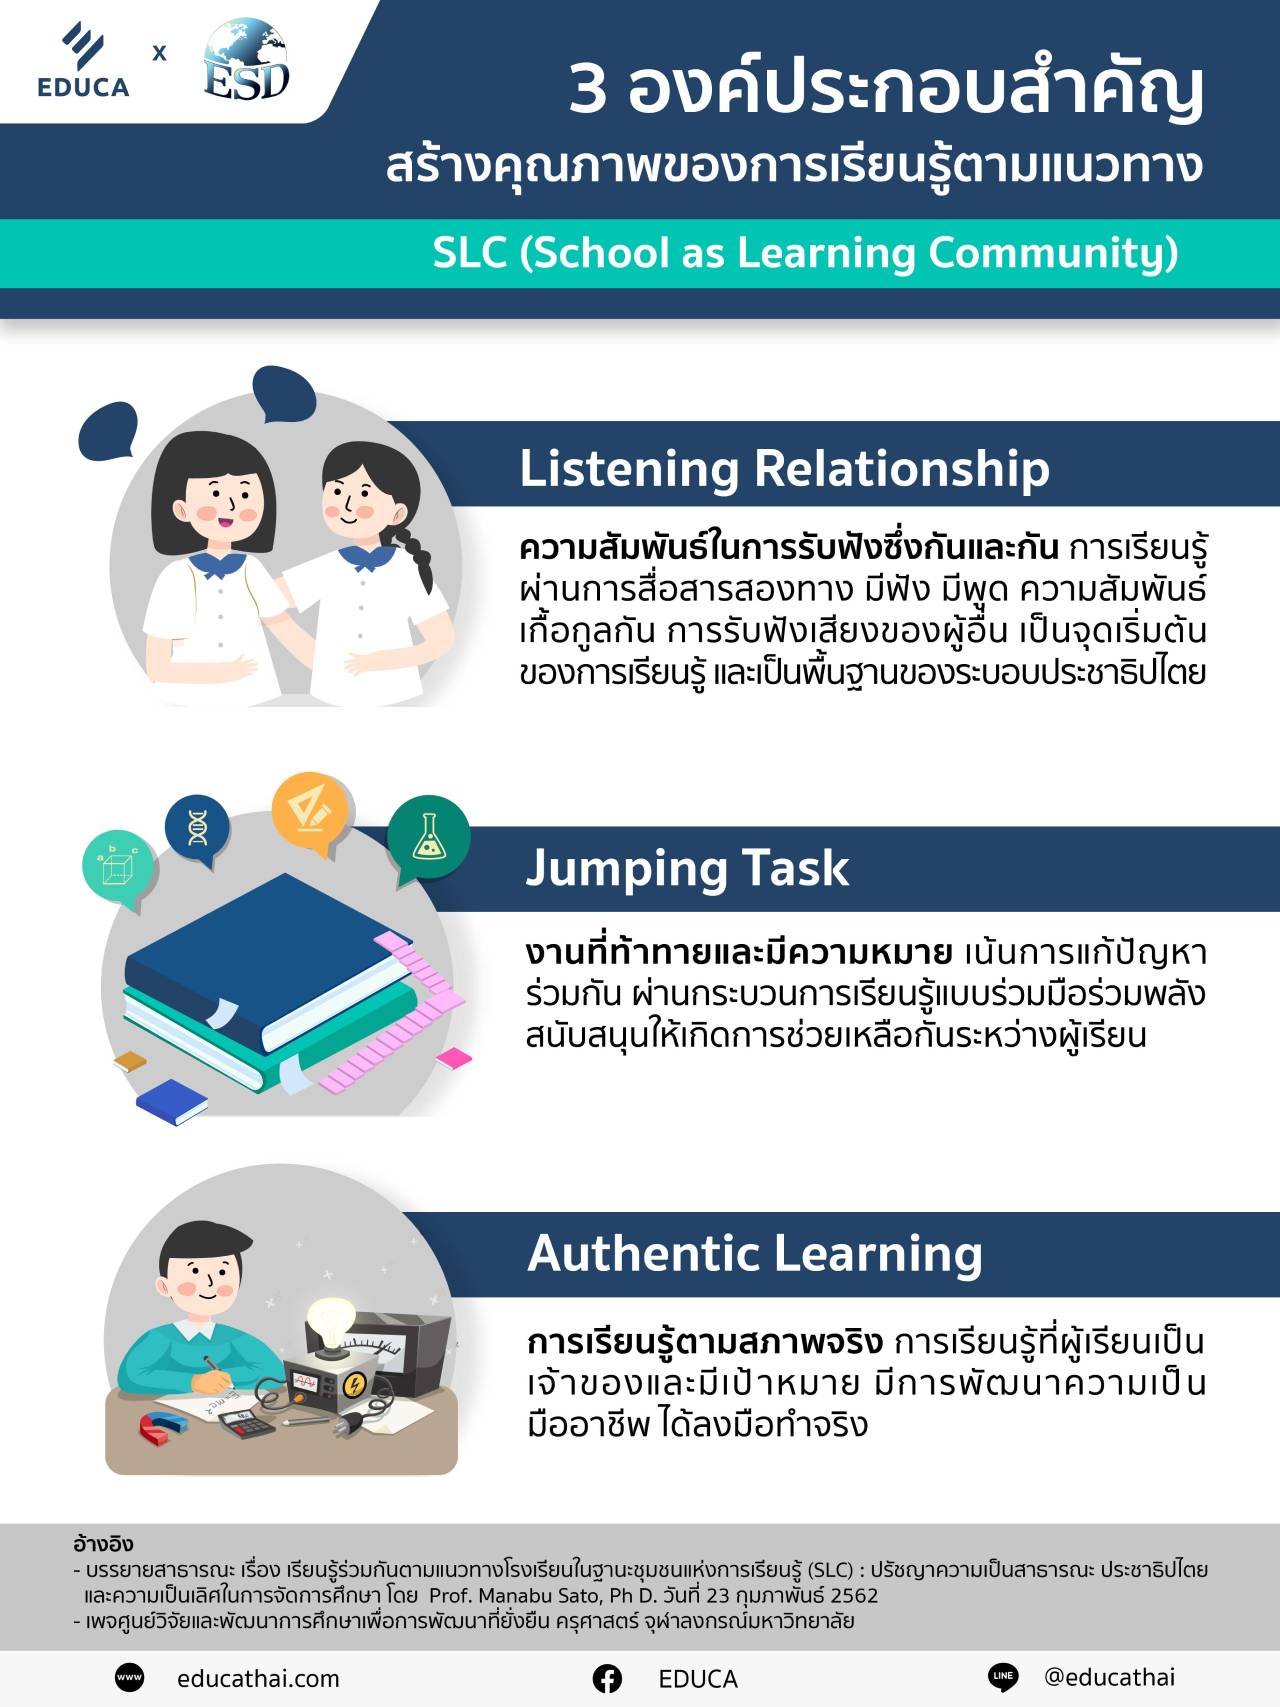 SLC - School as Learning Community